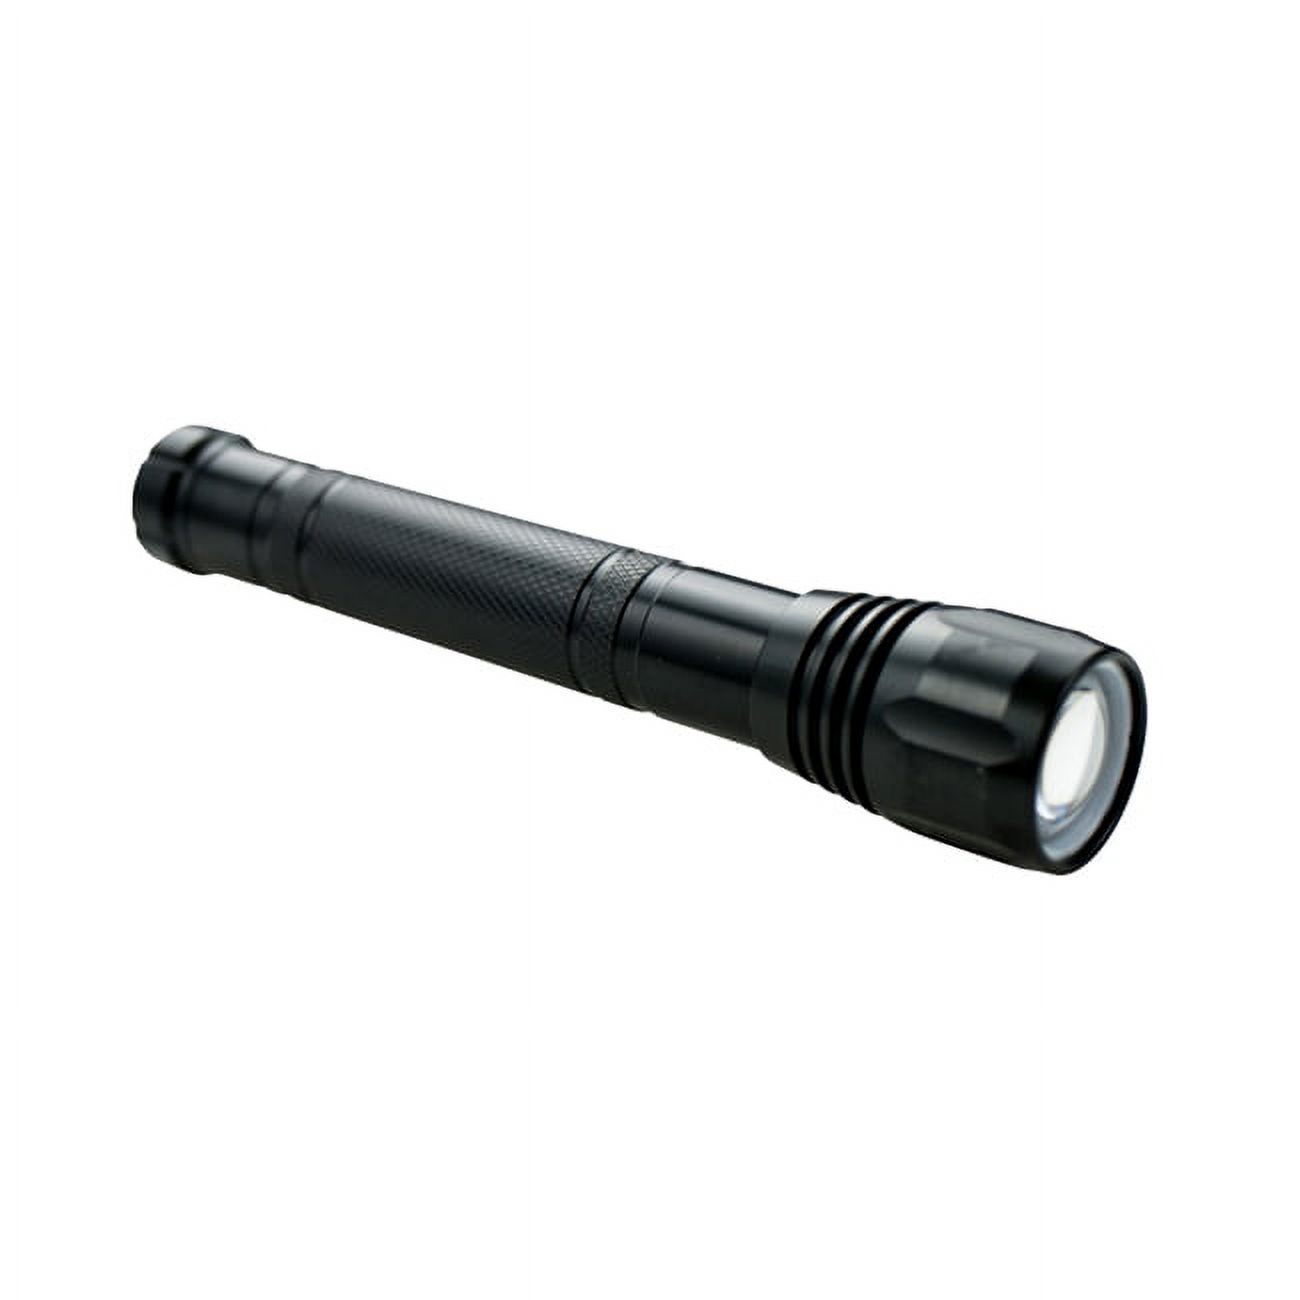 Dorcy 41-4216 2AA 200 Lumen Aluminum Focusing Flashlight - image 3 of 7